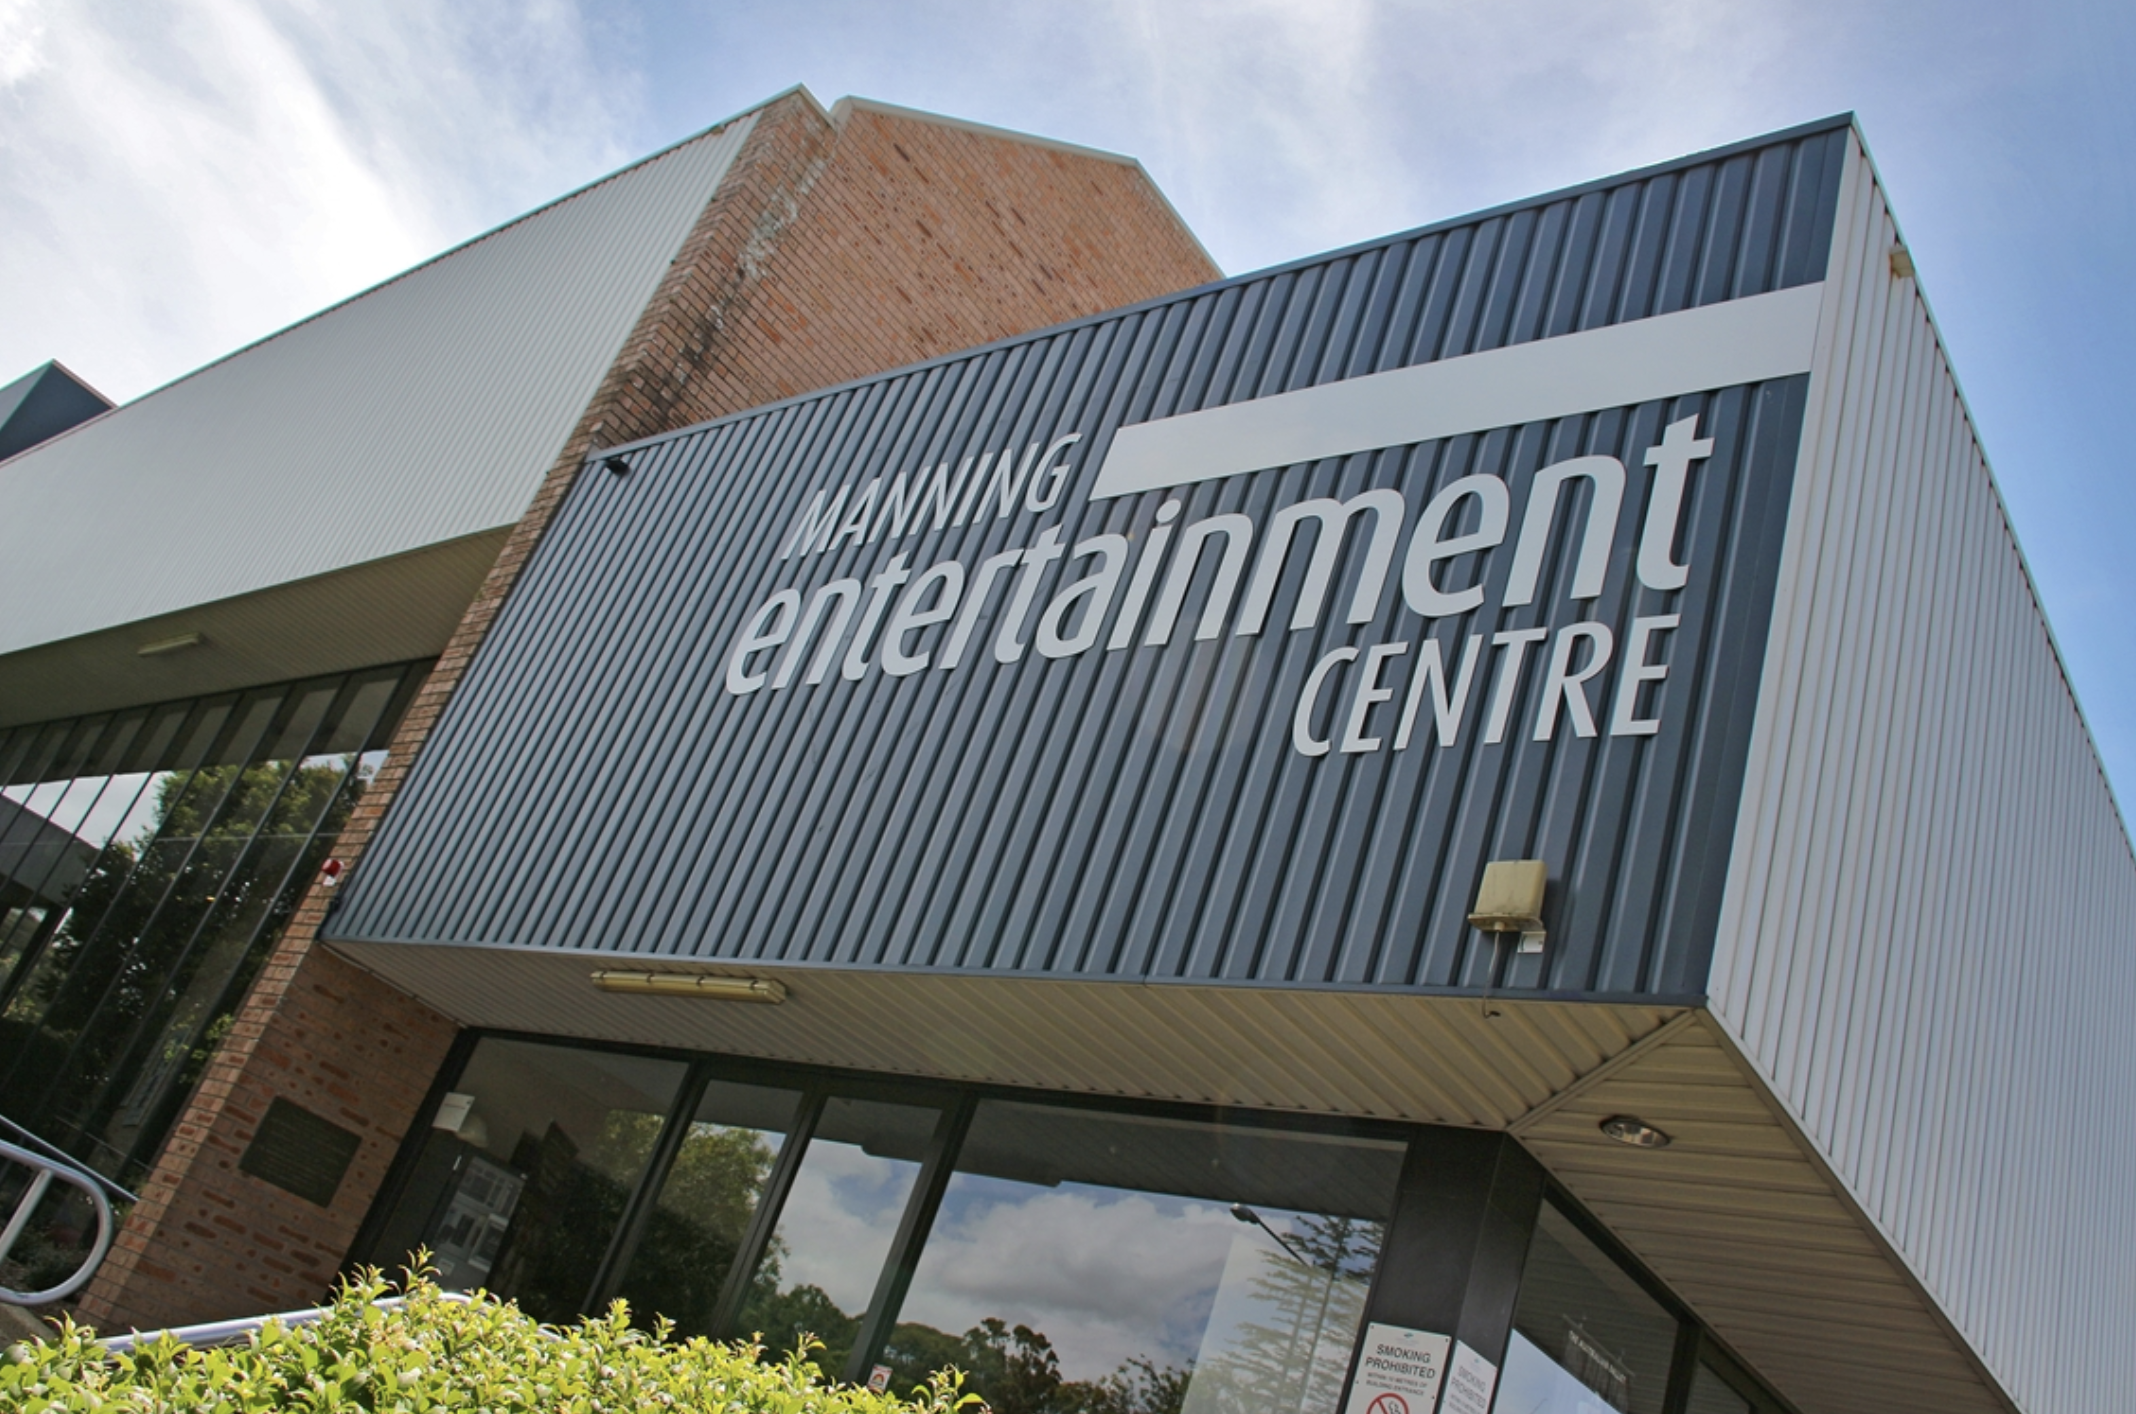 Manning Entertainment Centre